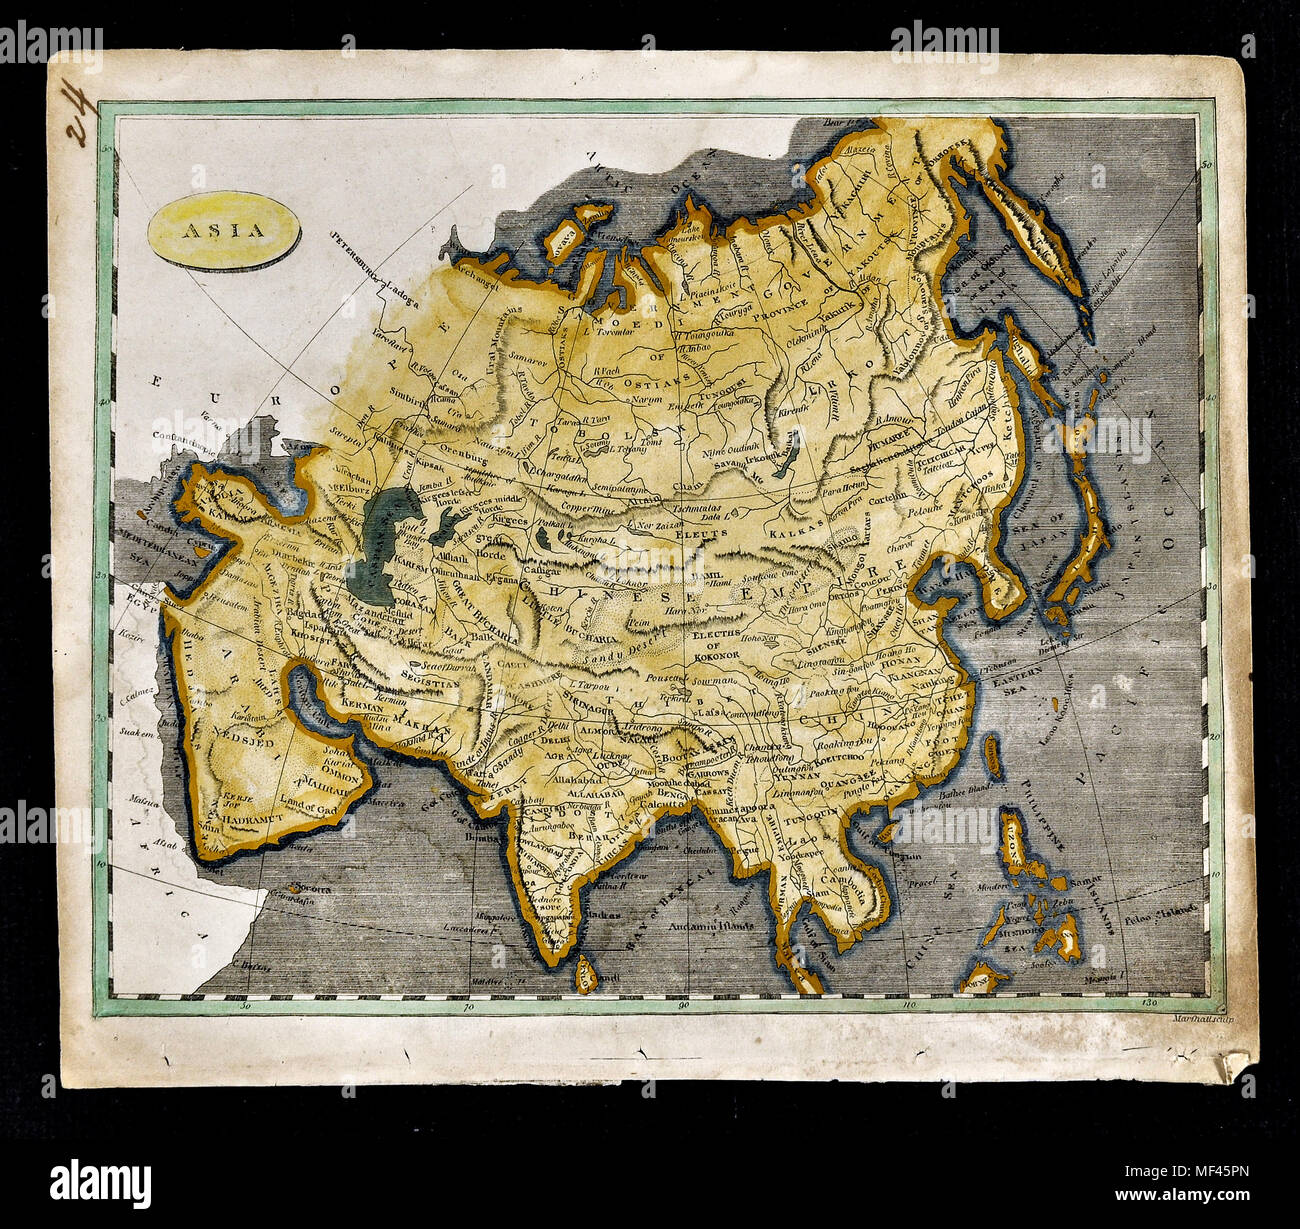 1804 Arrowsmith Map - Asia - Japan China Taiwan India Arabia Mongolia Siberia Iran Iraq Vietnam Stock Photo